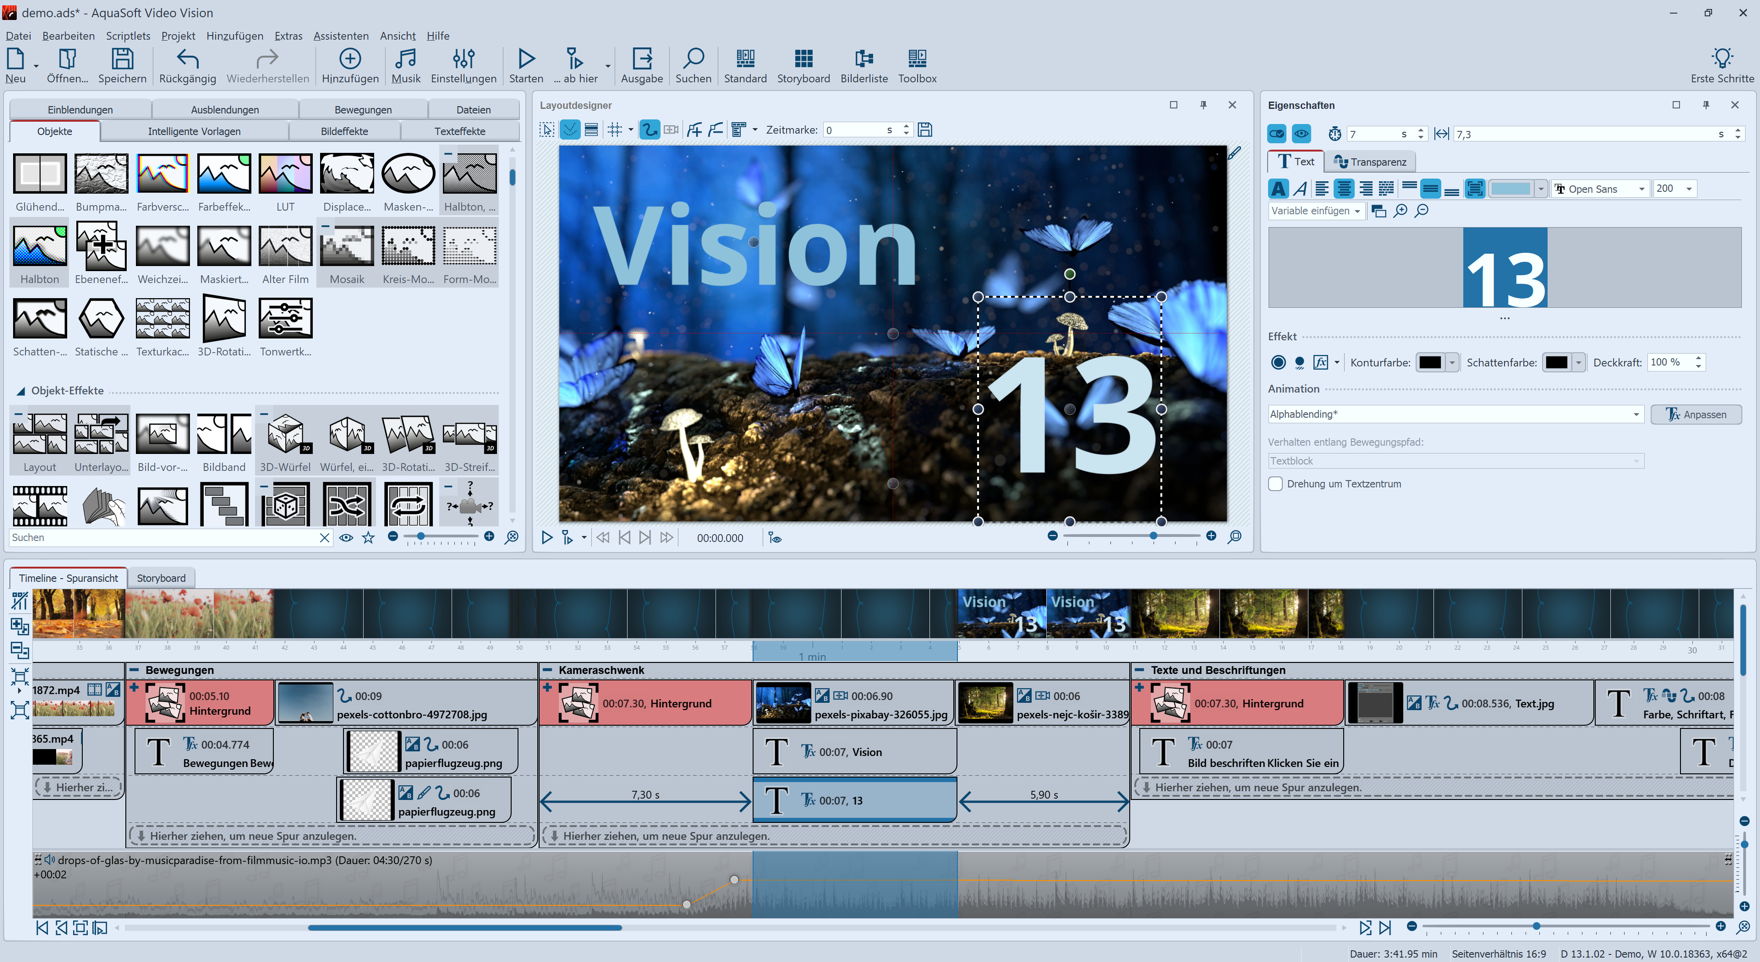 AquaSoft Video Vision 14.2.11 for mac download